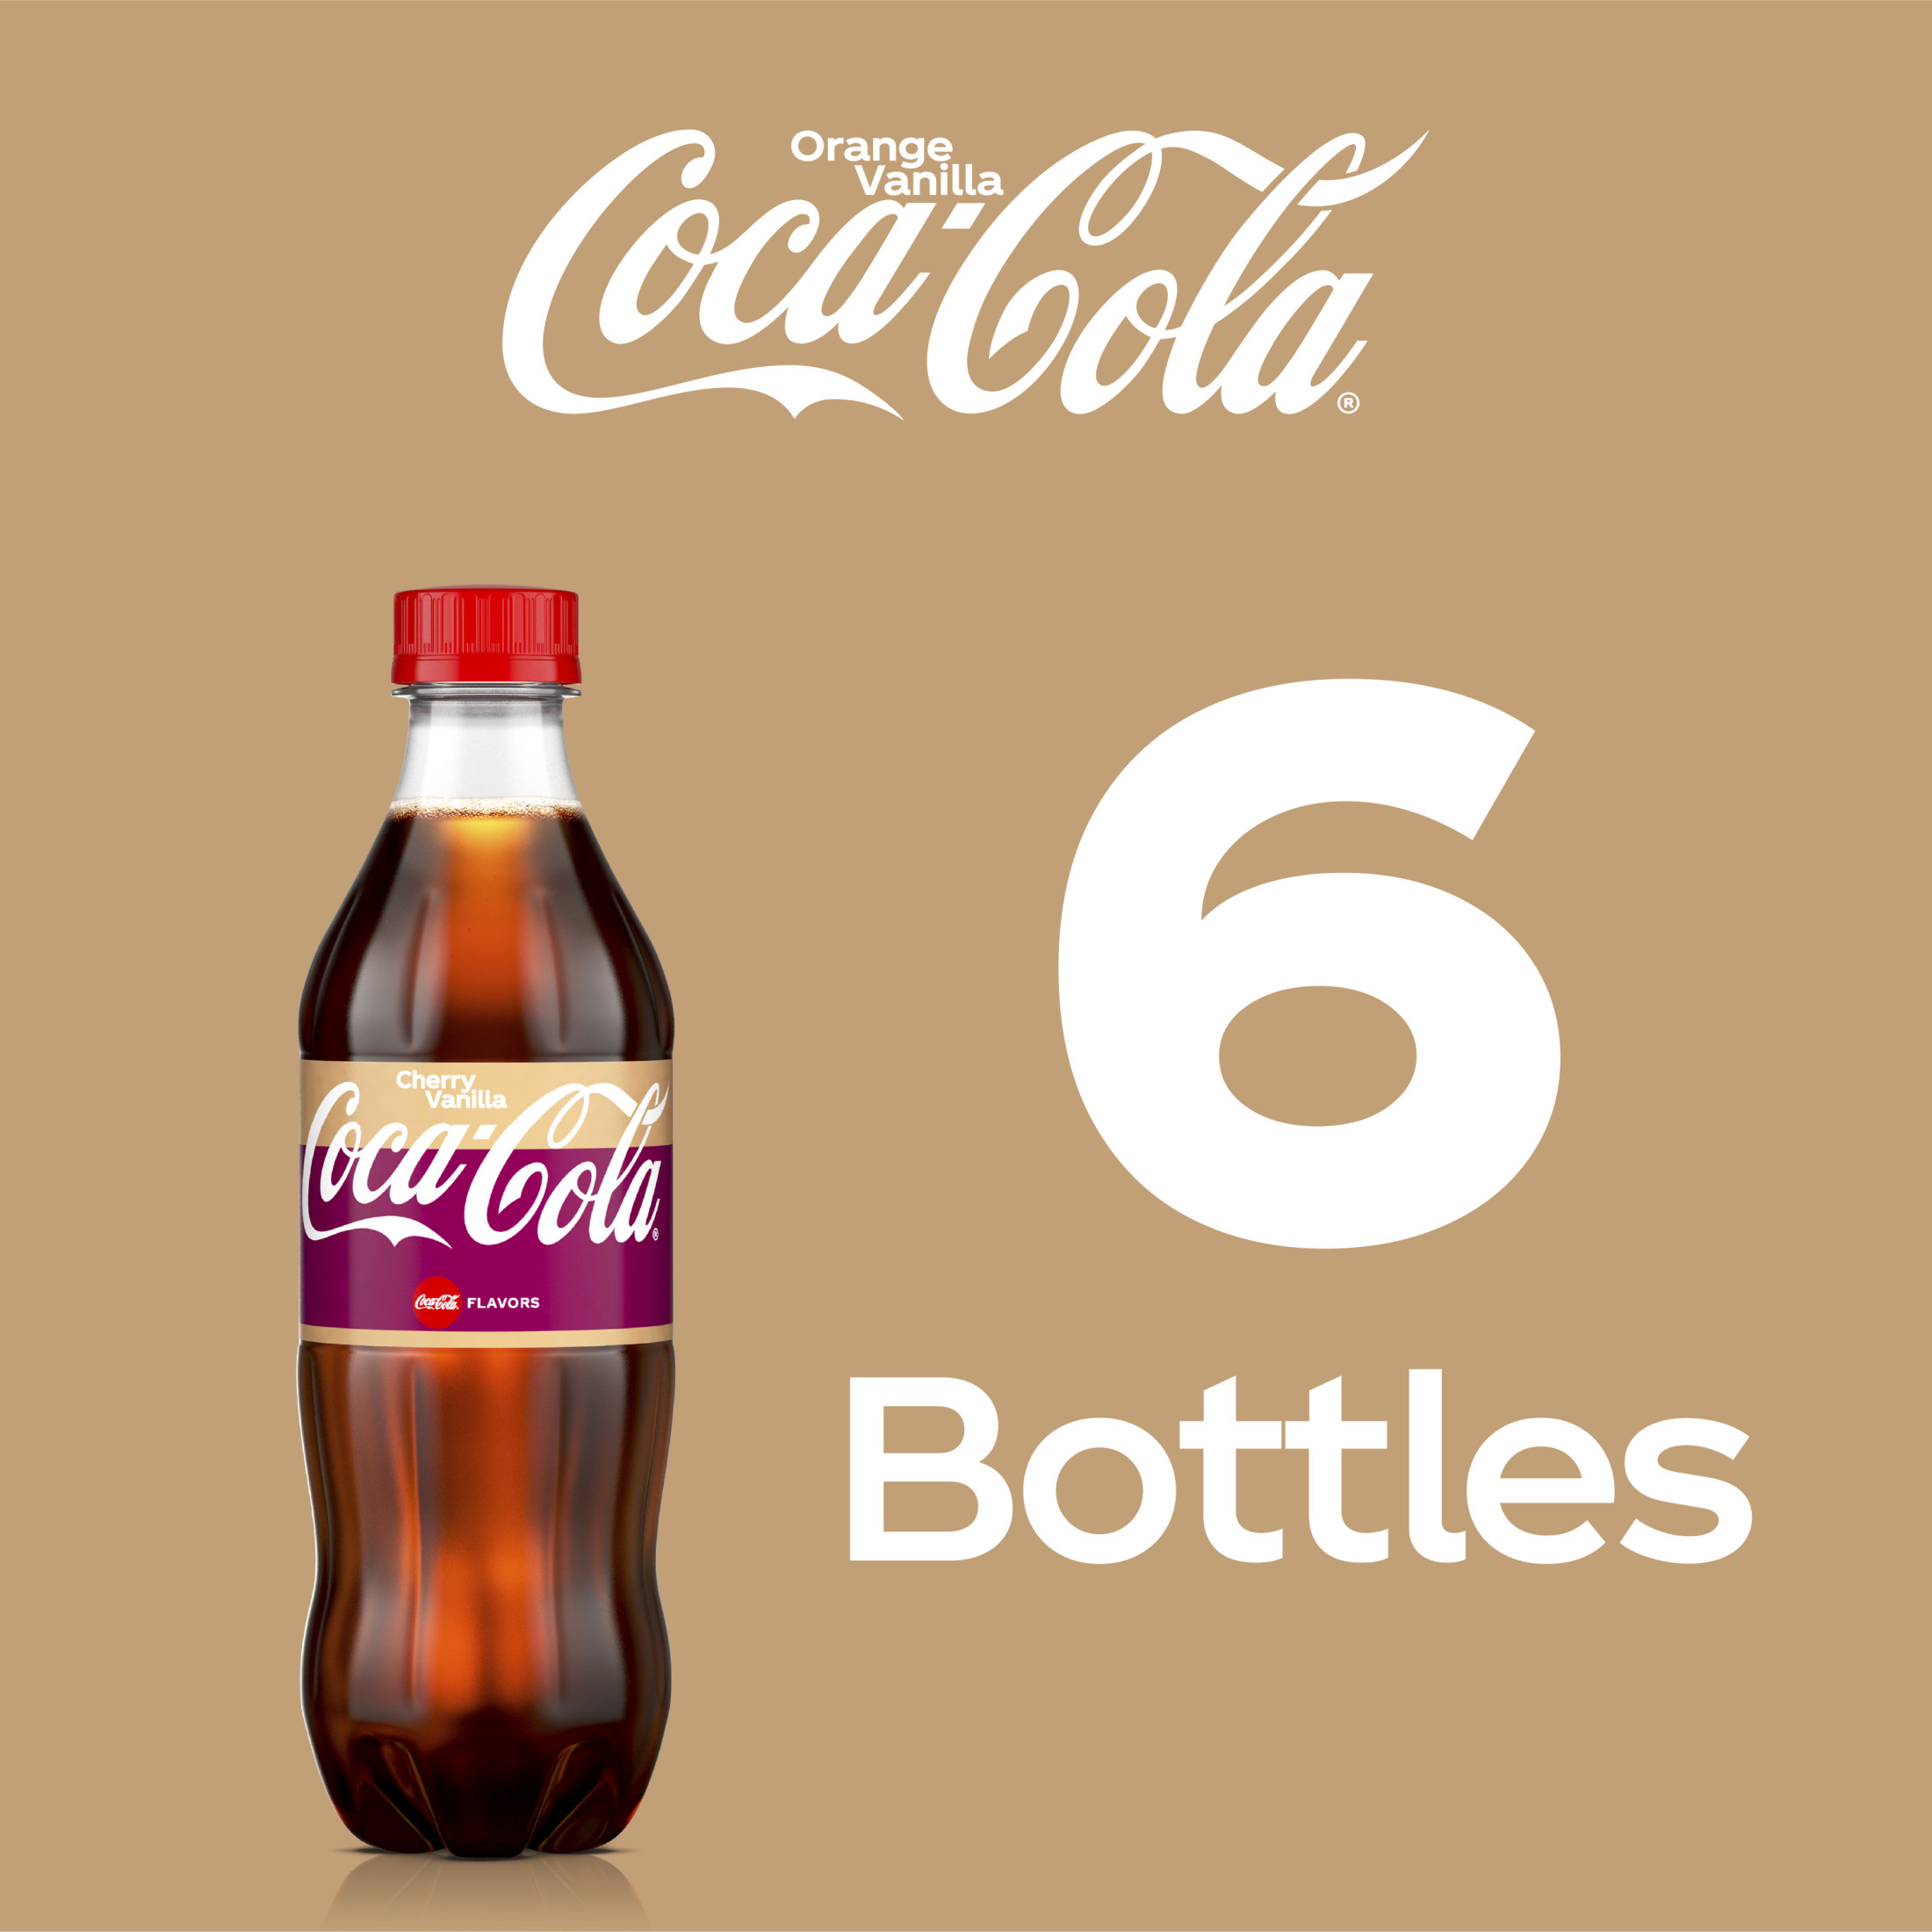 Coca-Cola Cherry Vanilla Soda Pop, 16.9 fl oz, 6 Pack Bottles - image 4 of 7